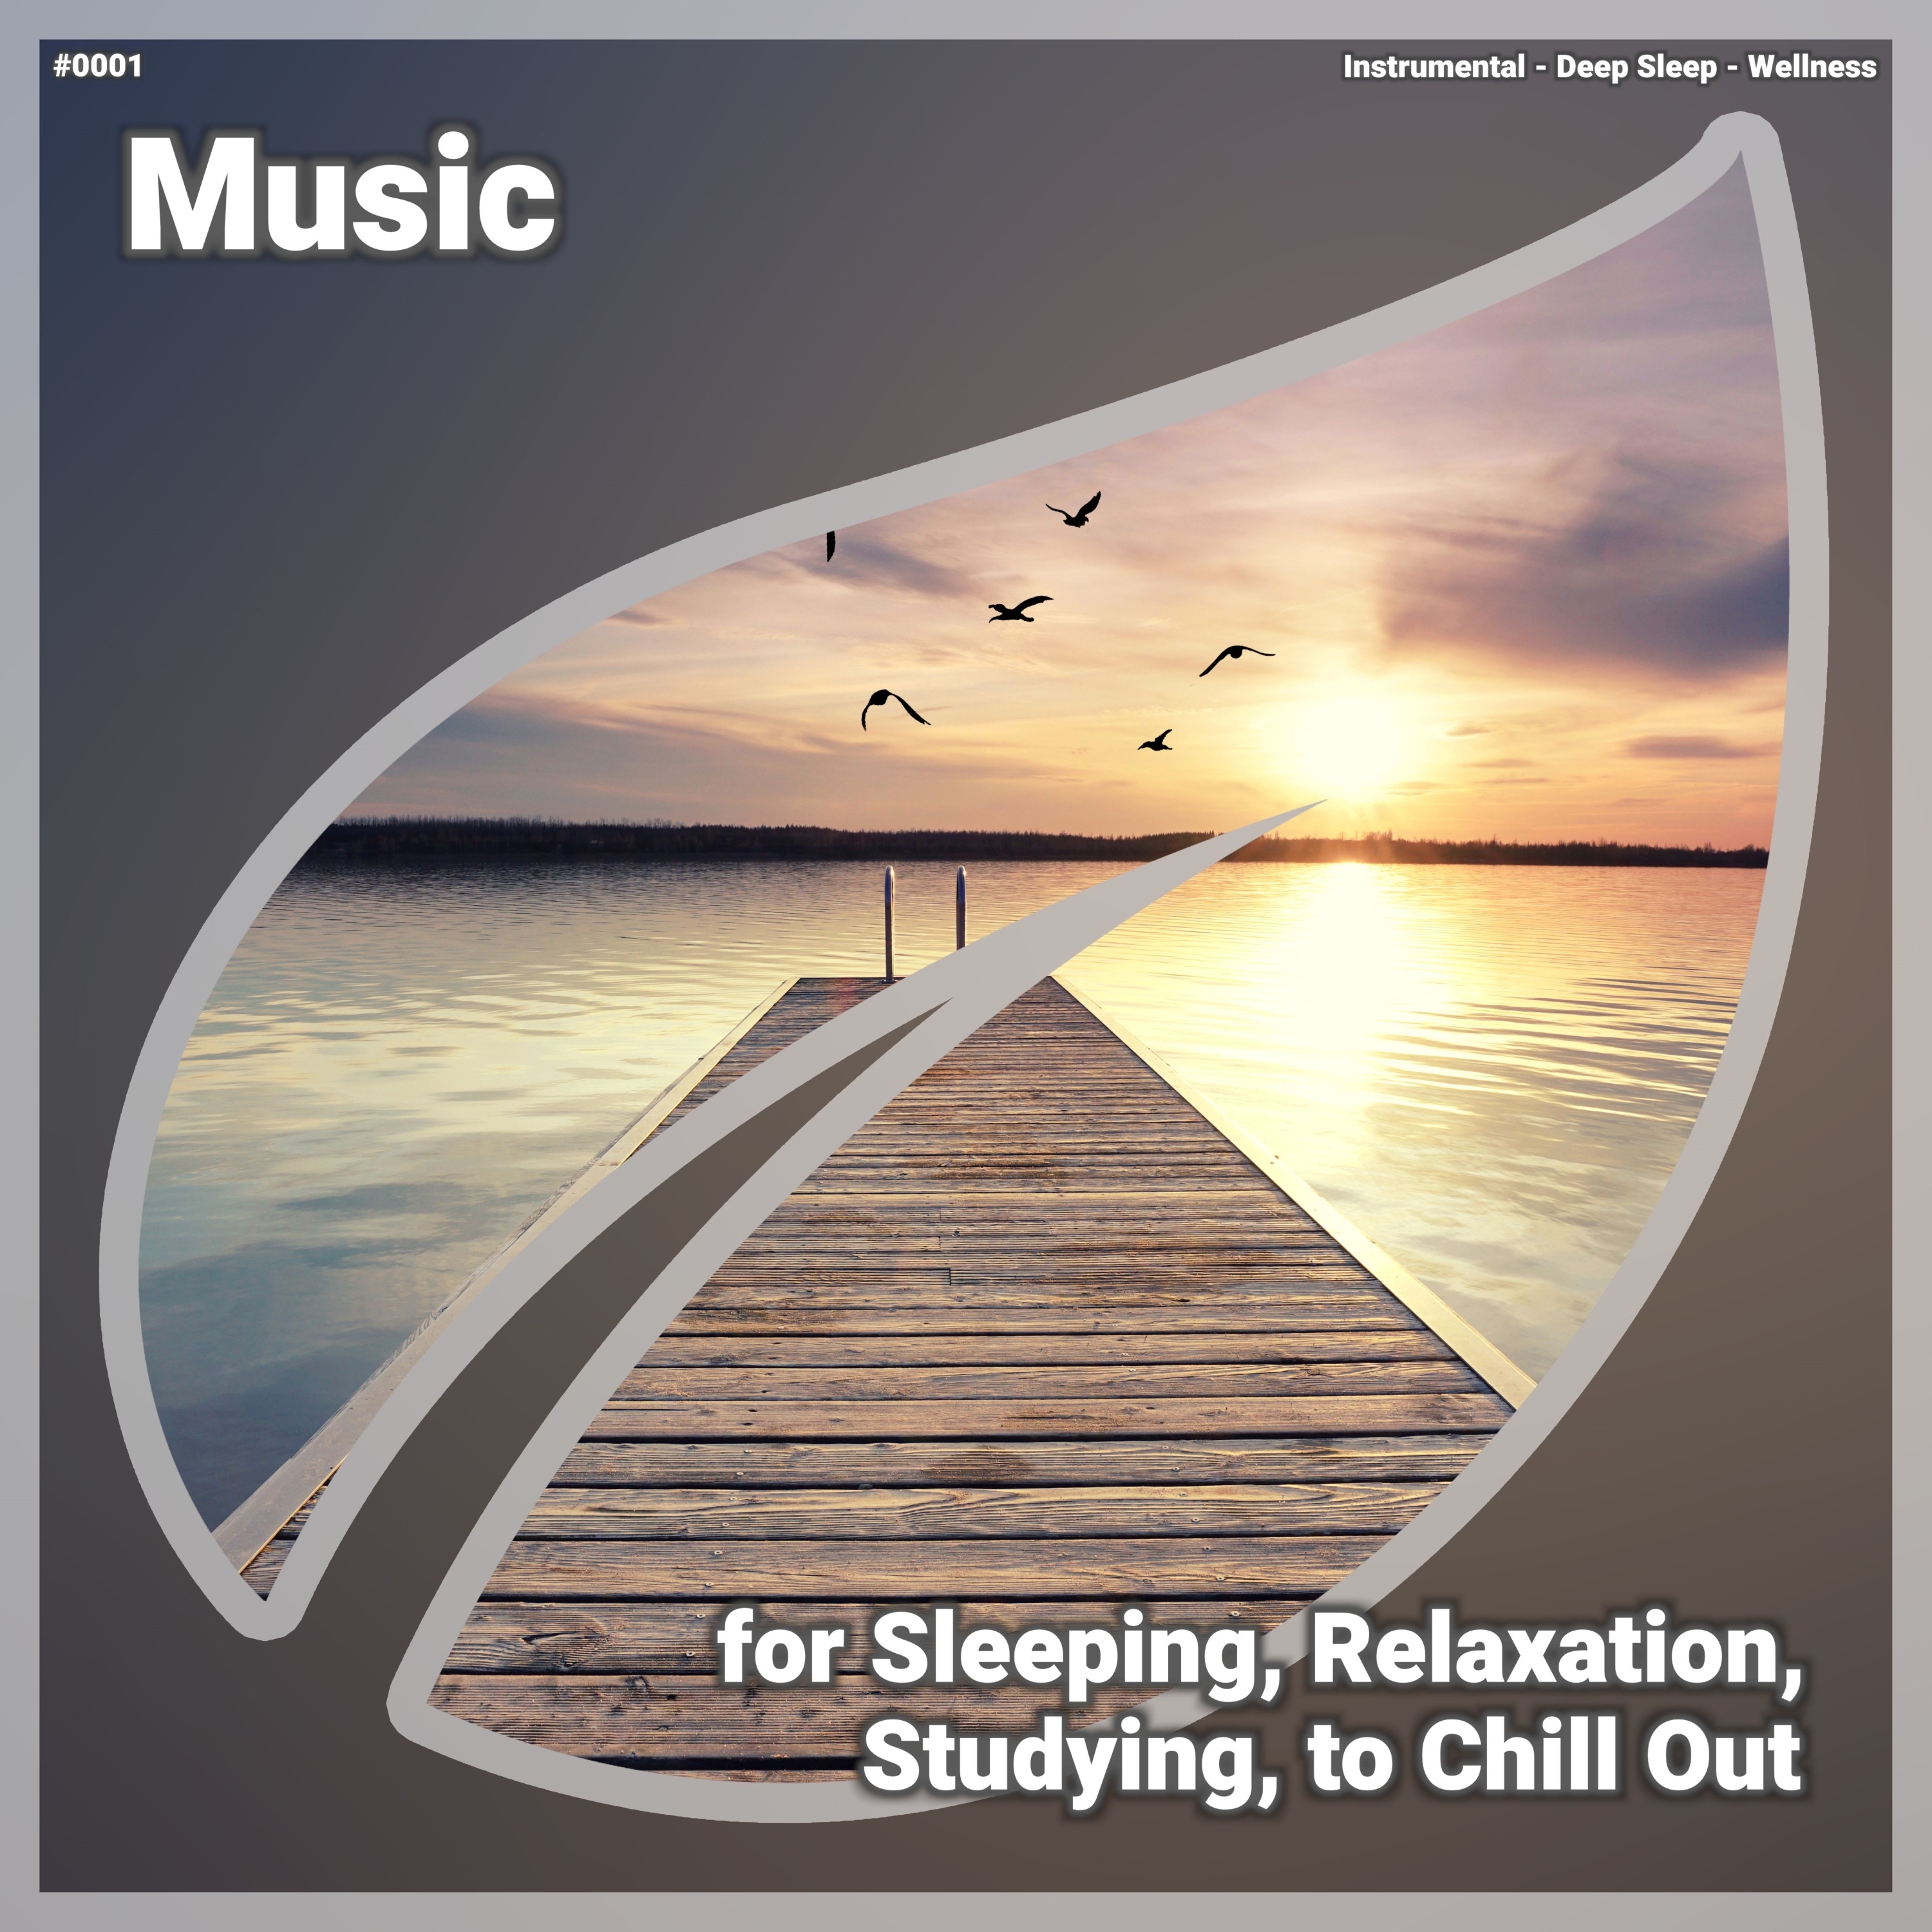 डाउनलोड करा Relaxing Music, Pt. 89